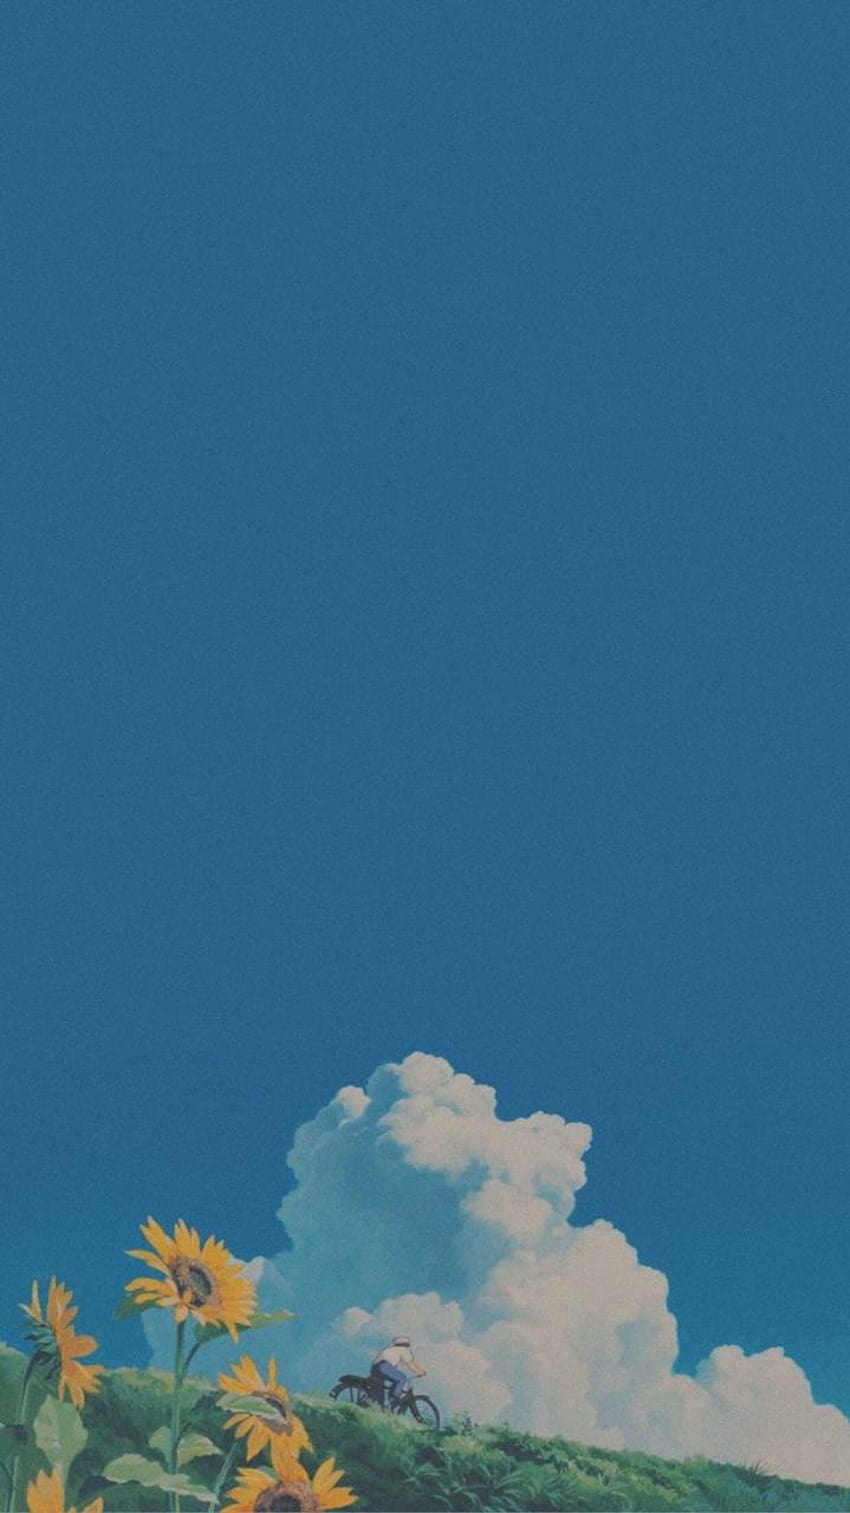 Pemandangan Anime oleh Michaela_yahaya, lanskap biru yang estetis wallpaper ponsel HD